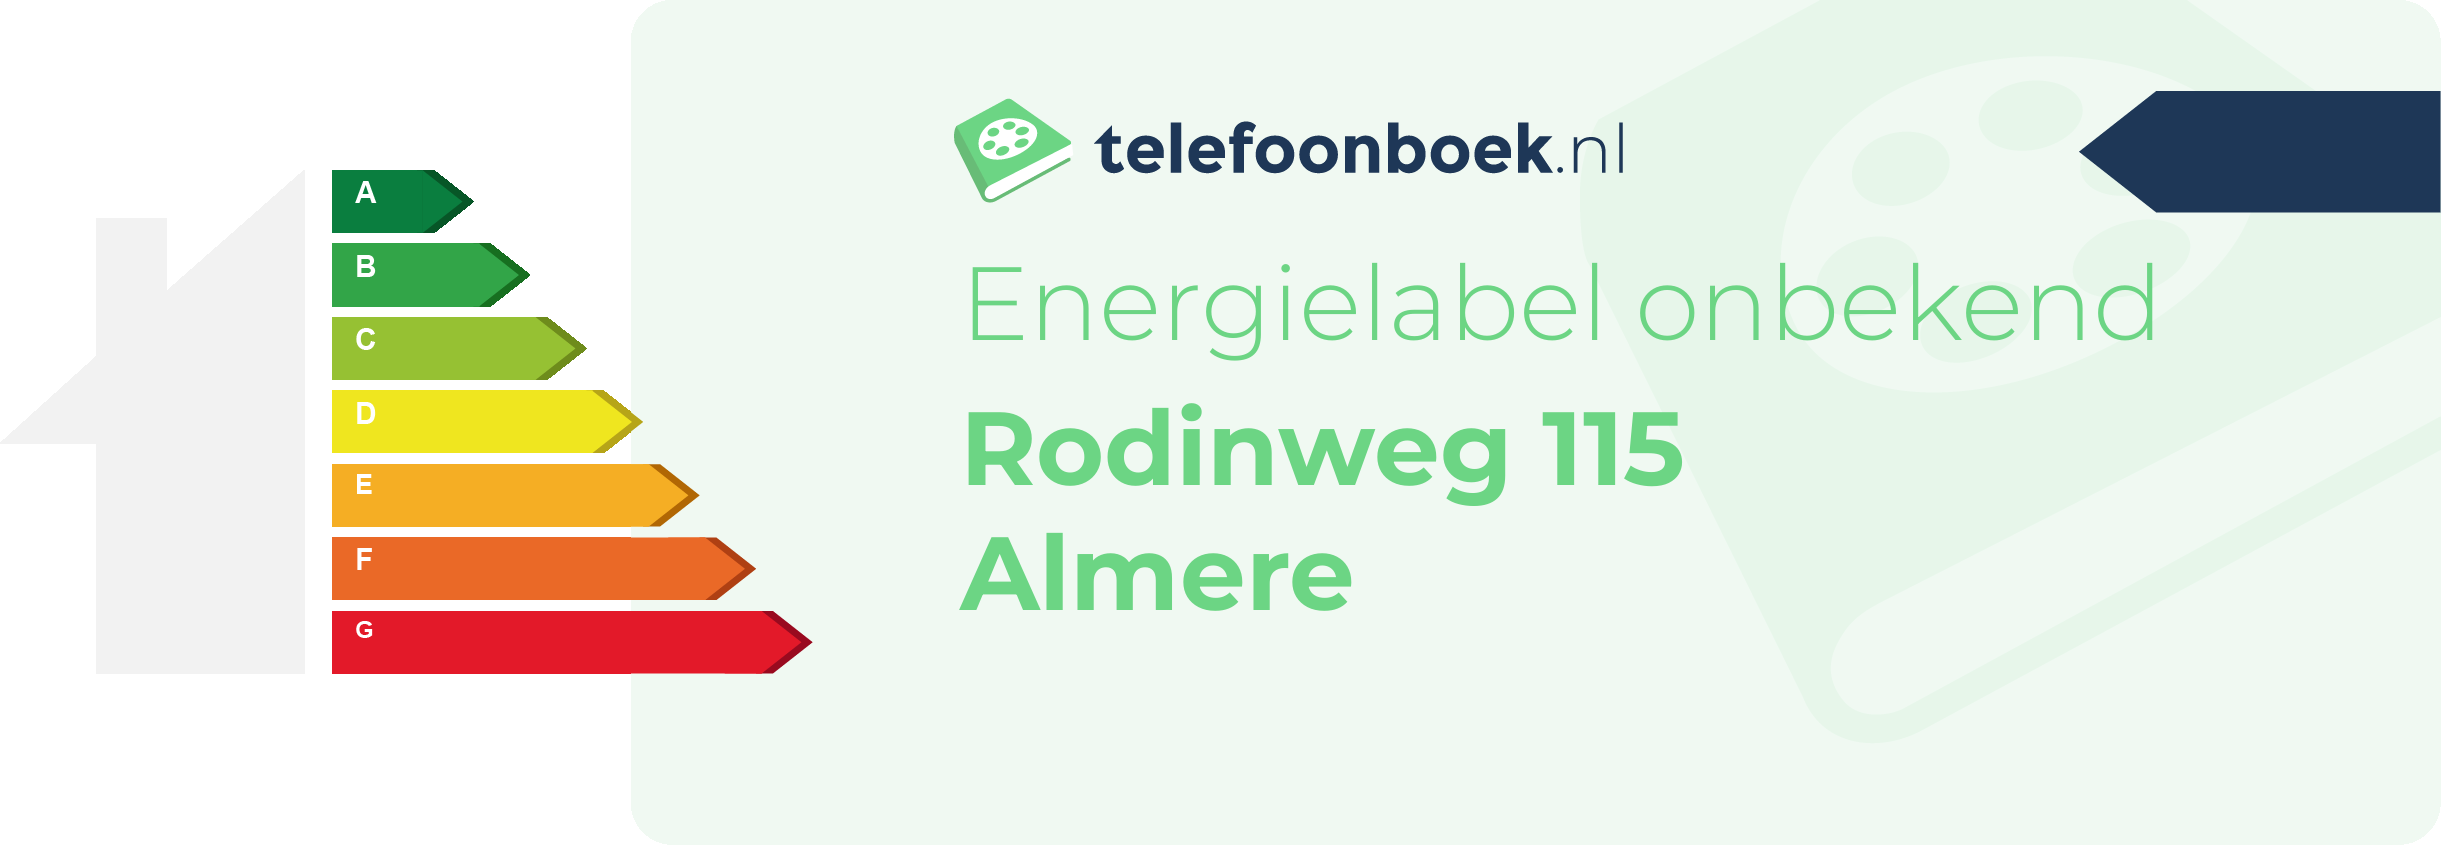 Energielabel Rodinweg 115 Almere